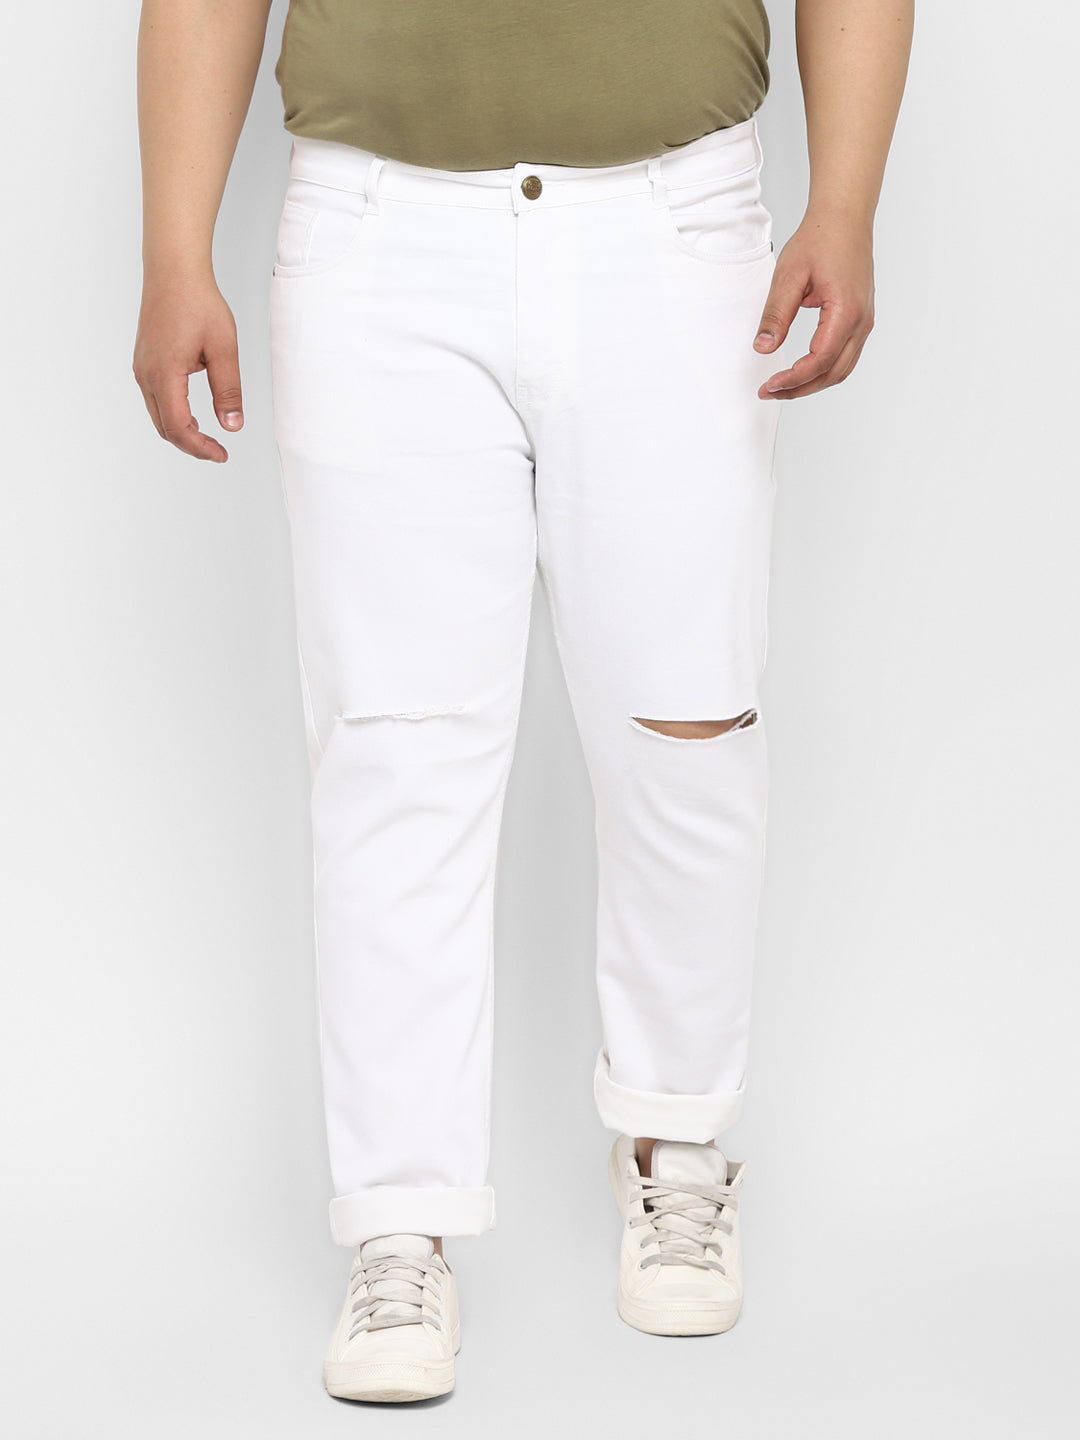 Urbano Plus Men's White Regular Fit Knee Slit Distressed Jeans Stretchable